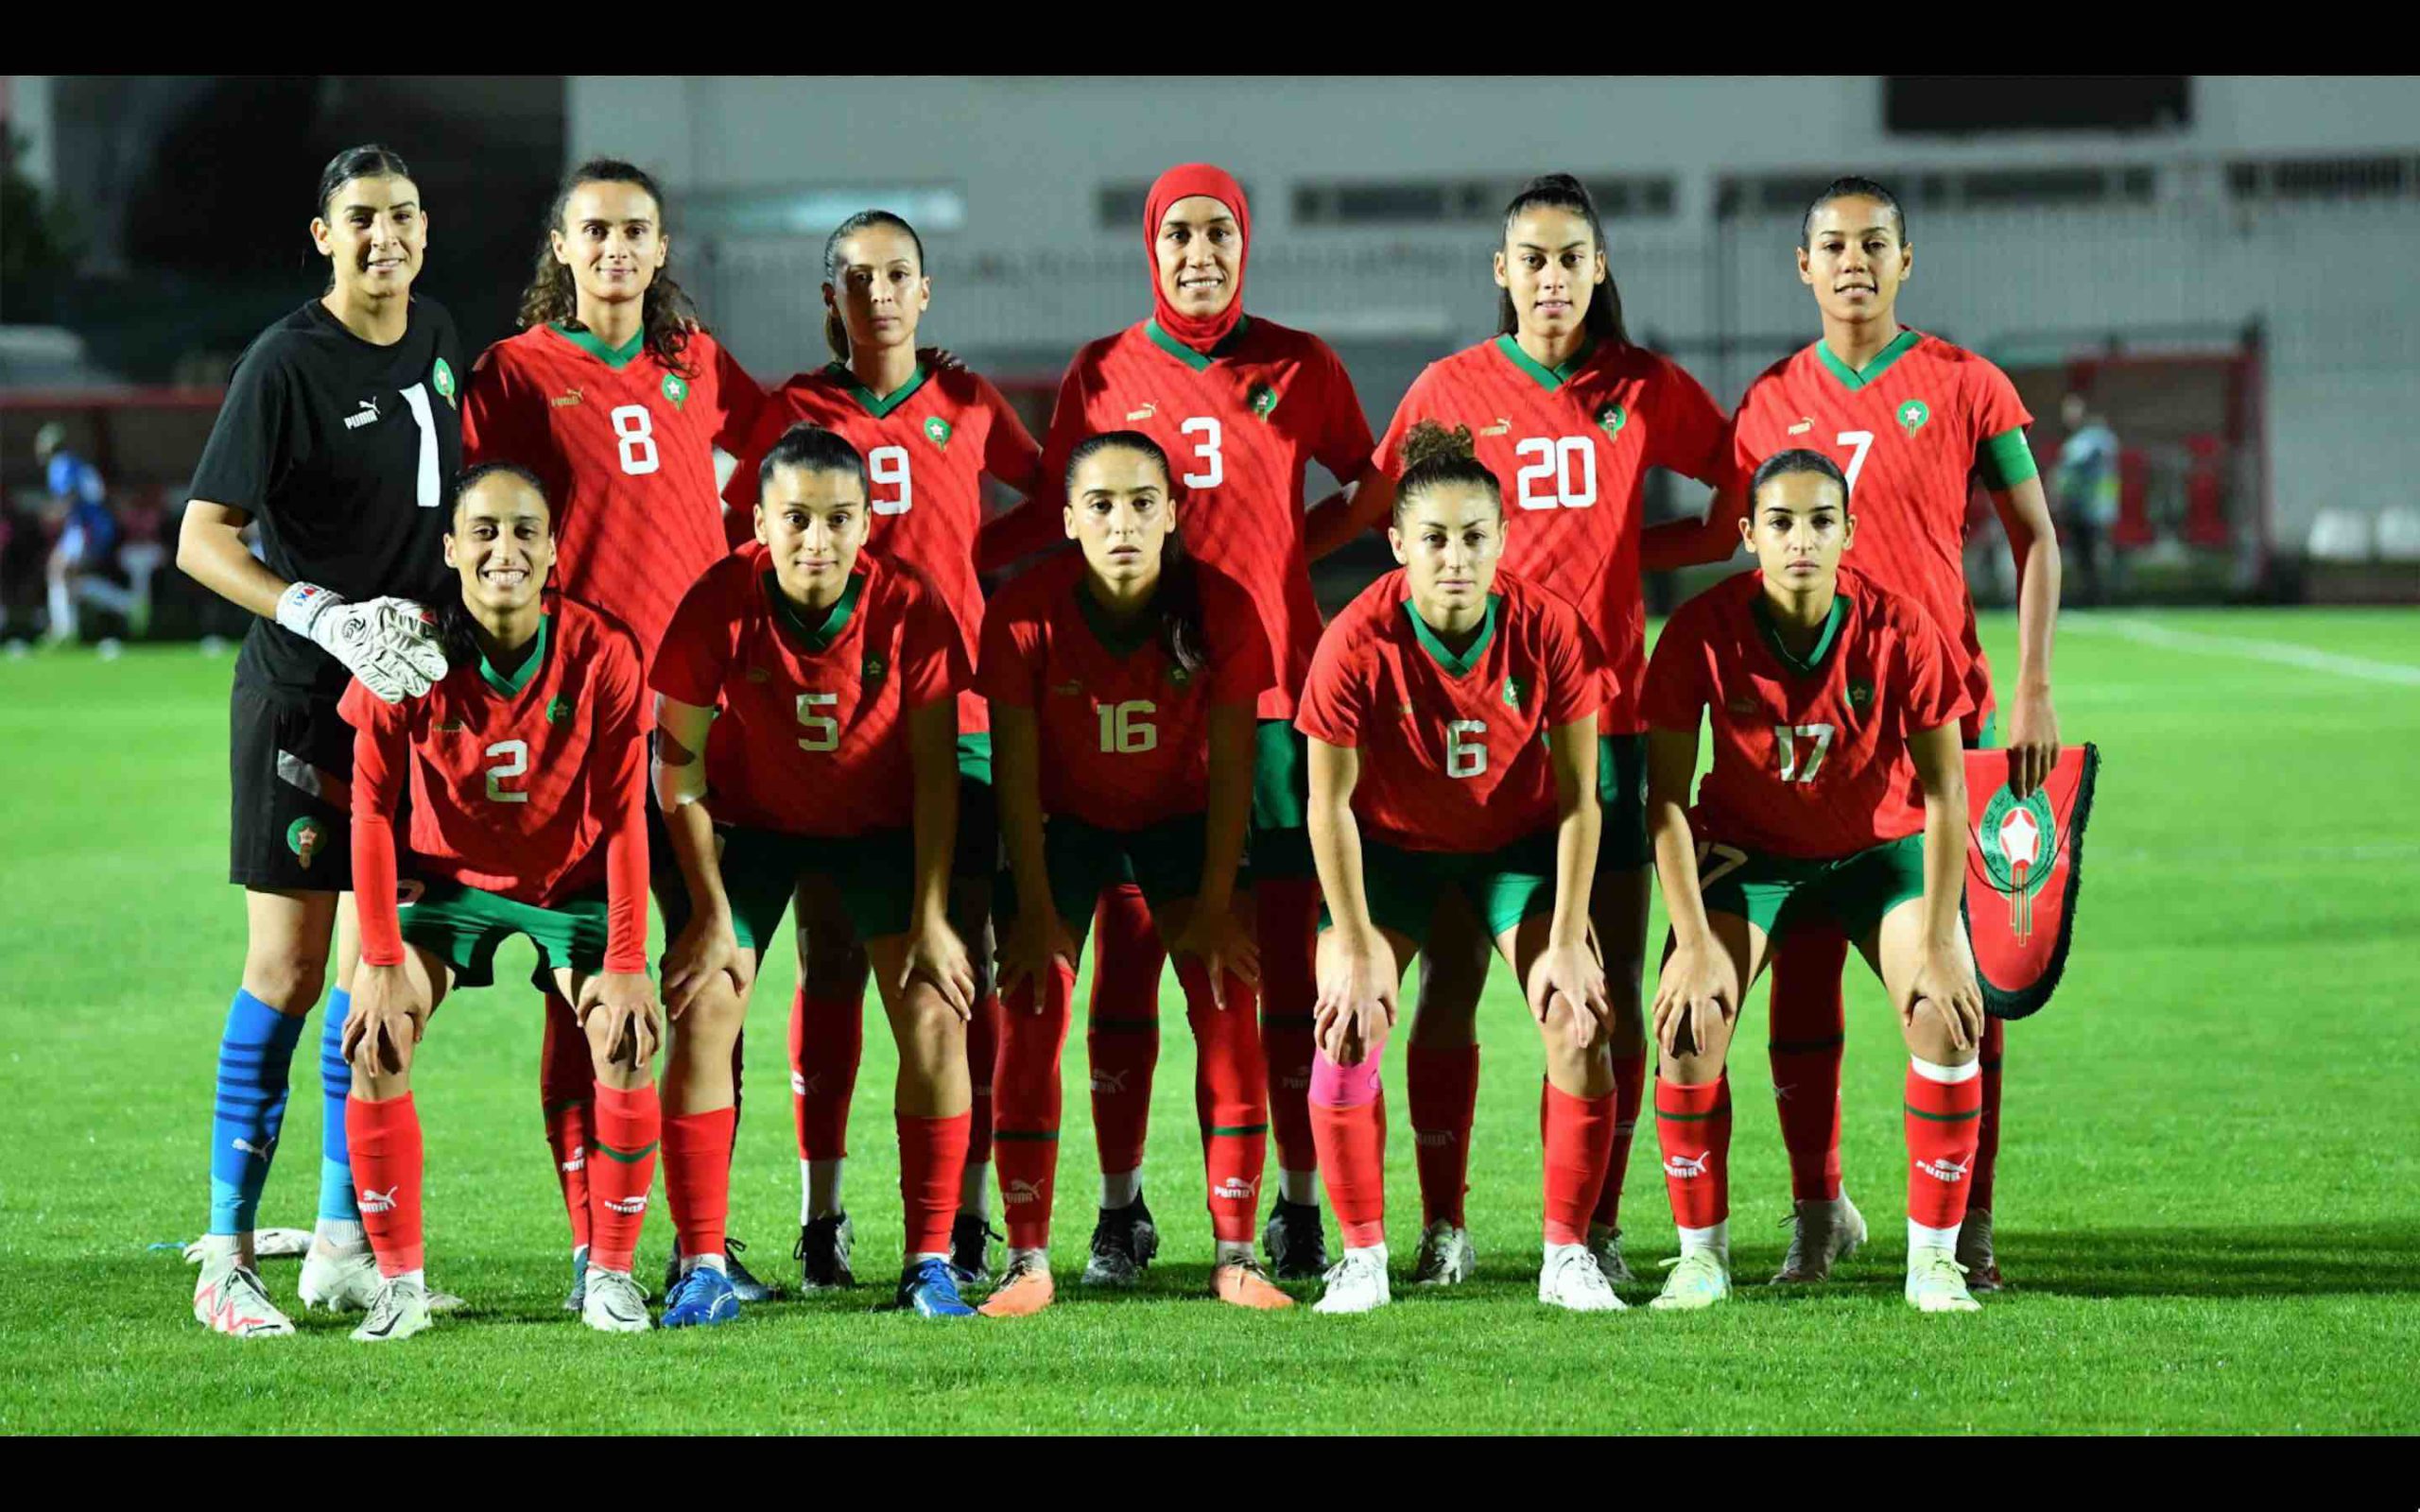 équipe nationale foot Maroc équipe marocaine football